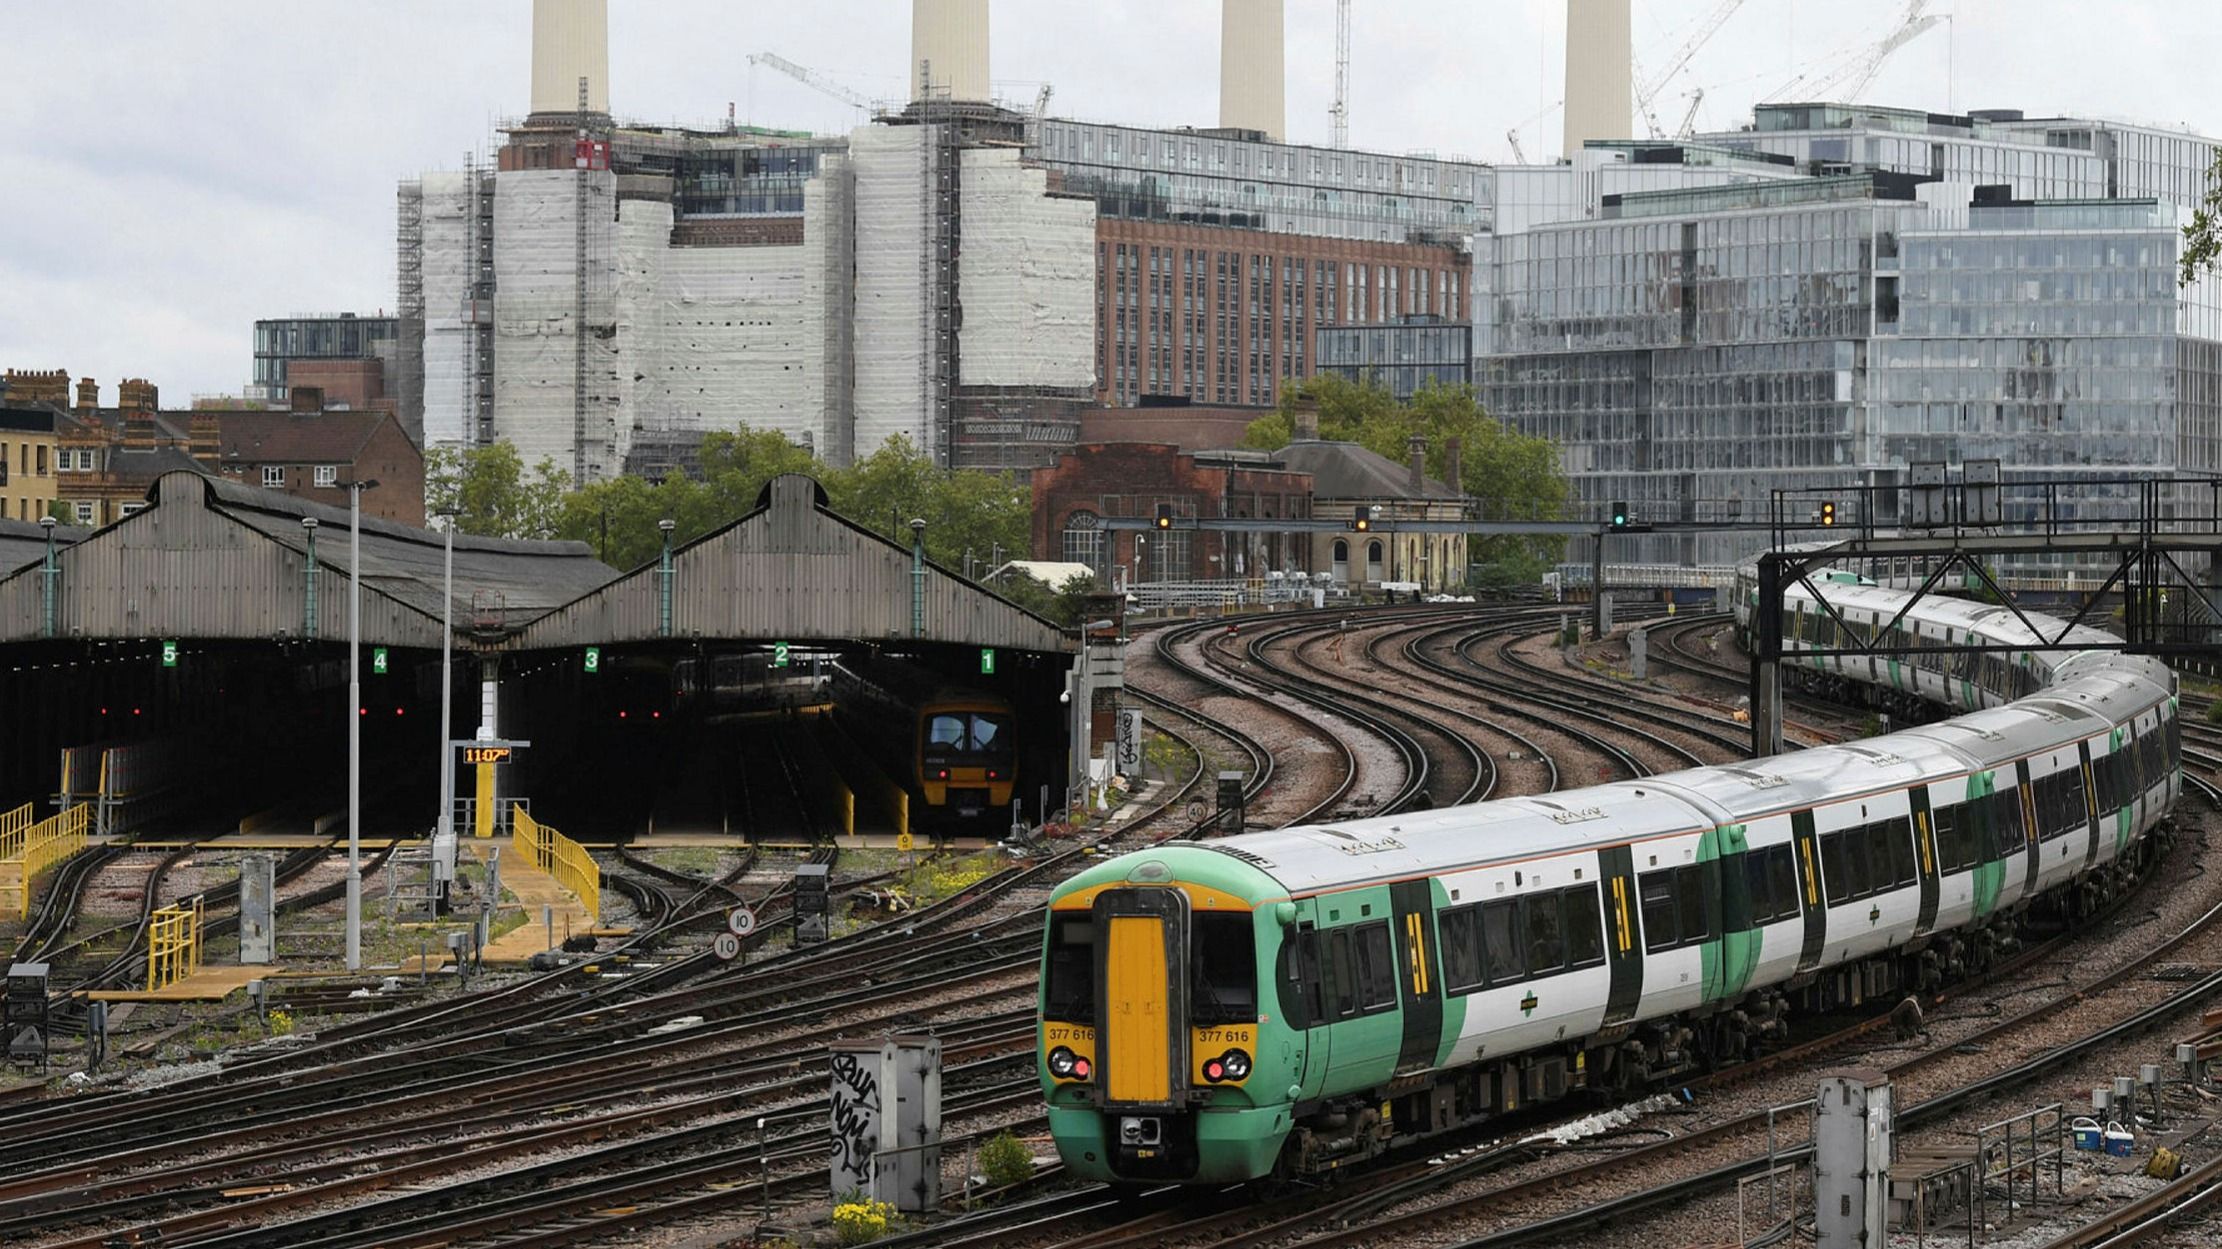 The UK set for national railway strike as last-ditch talks fail